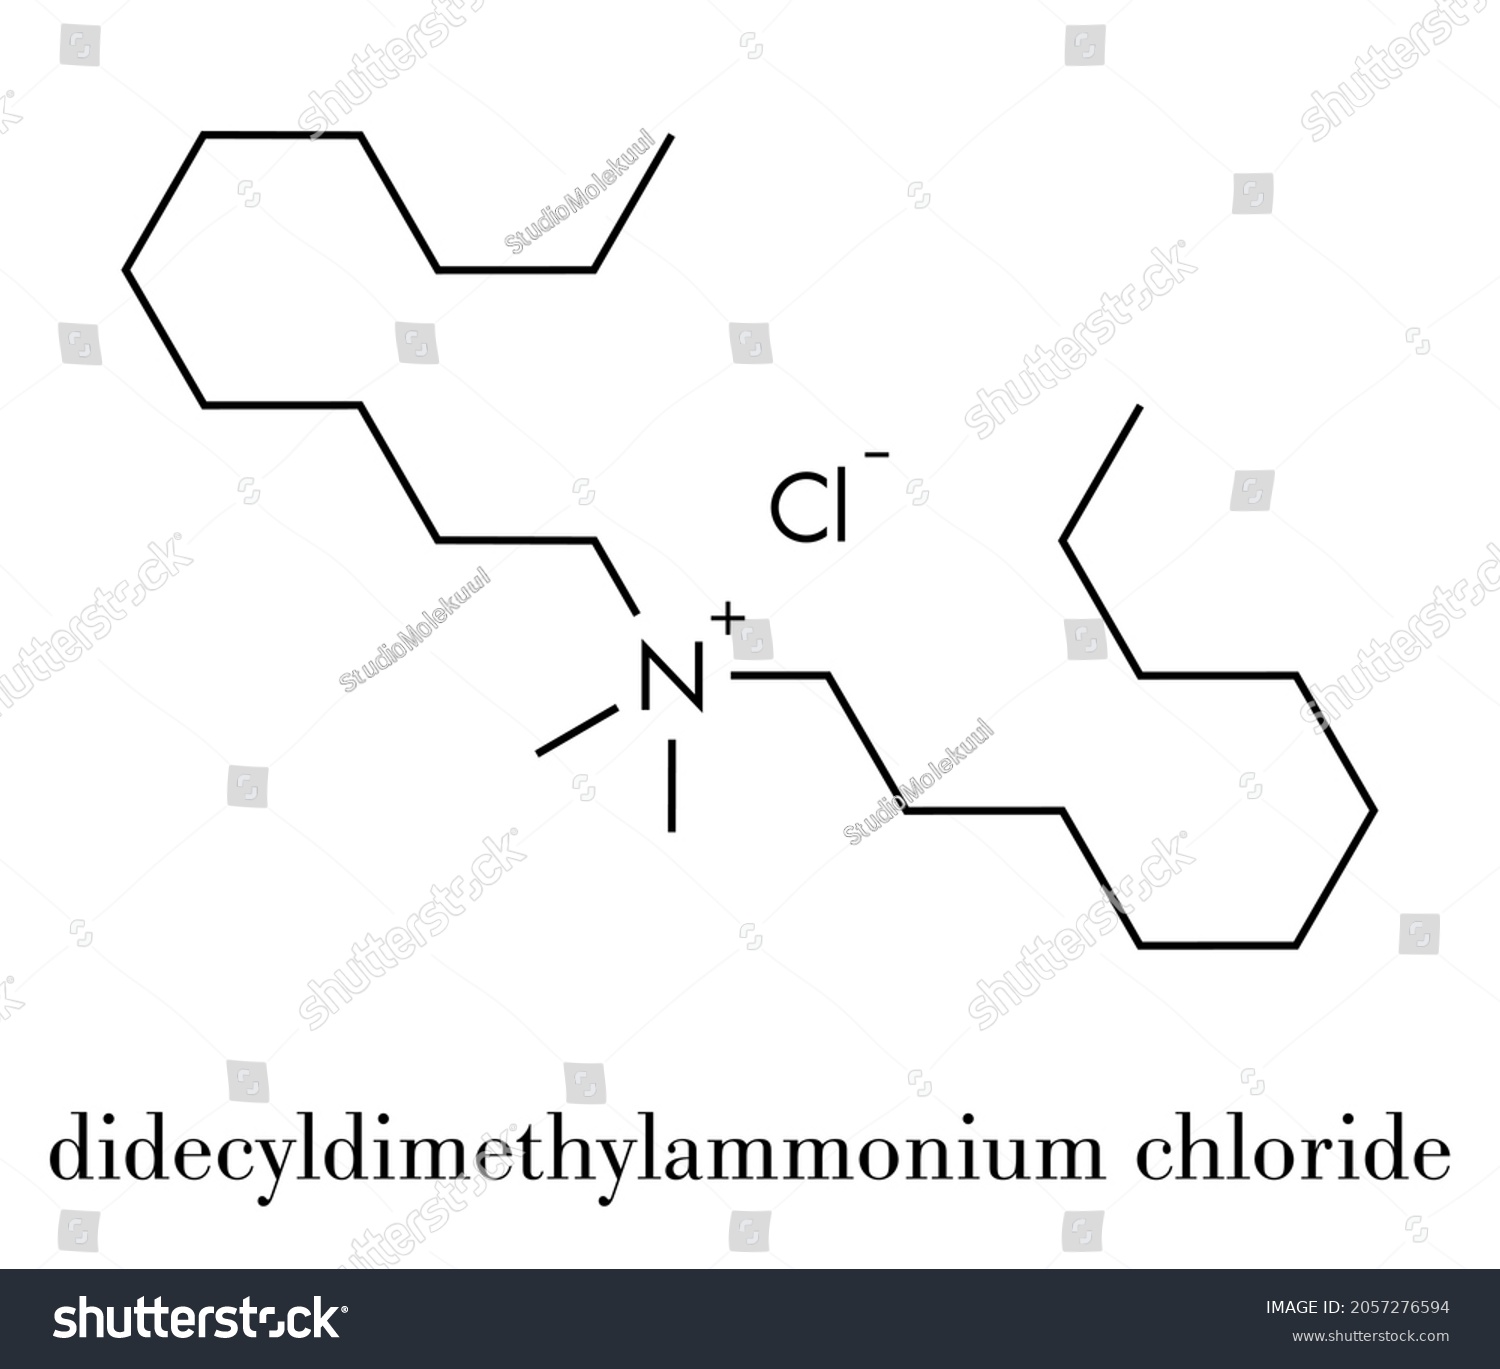 SVG of Didecyldimethylammonium chloride antiseptic molecule. Biocidal disinfectant, active against bacteria and fungi. Skeletal formula. svg